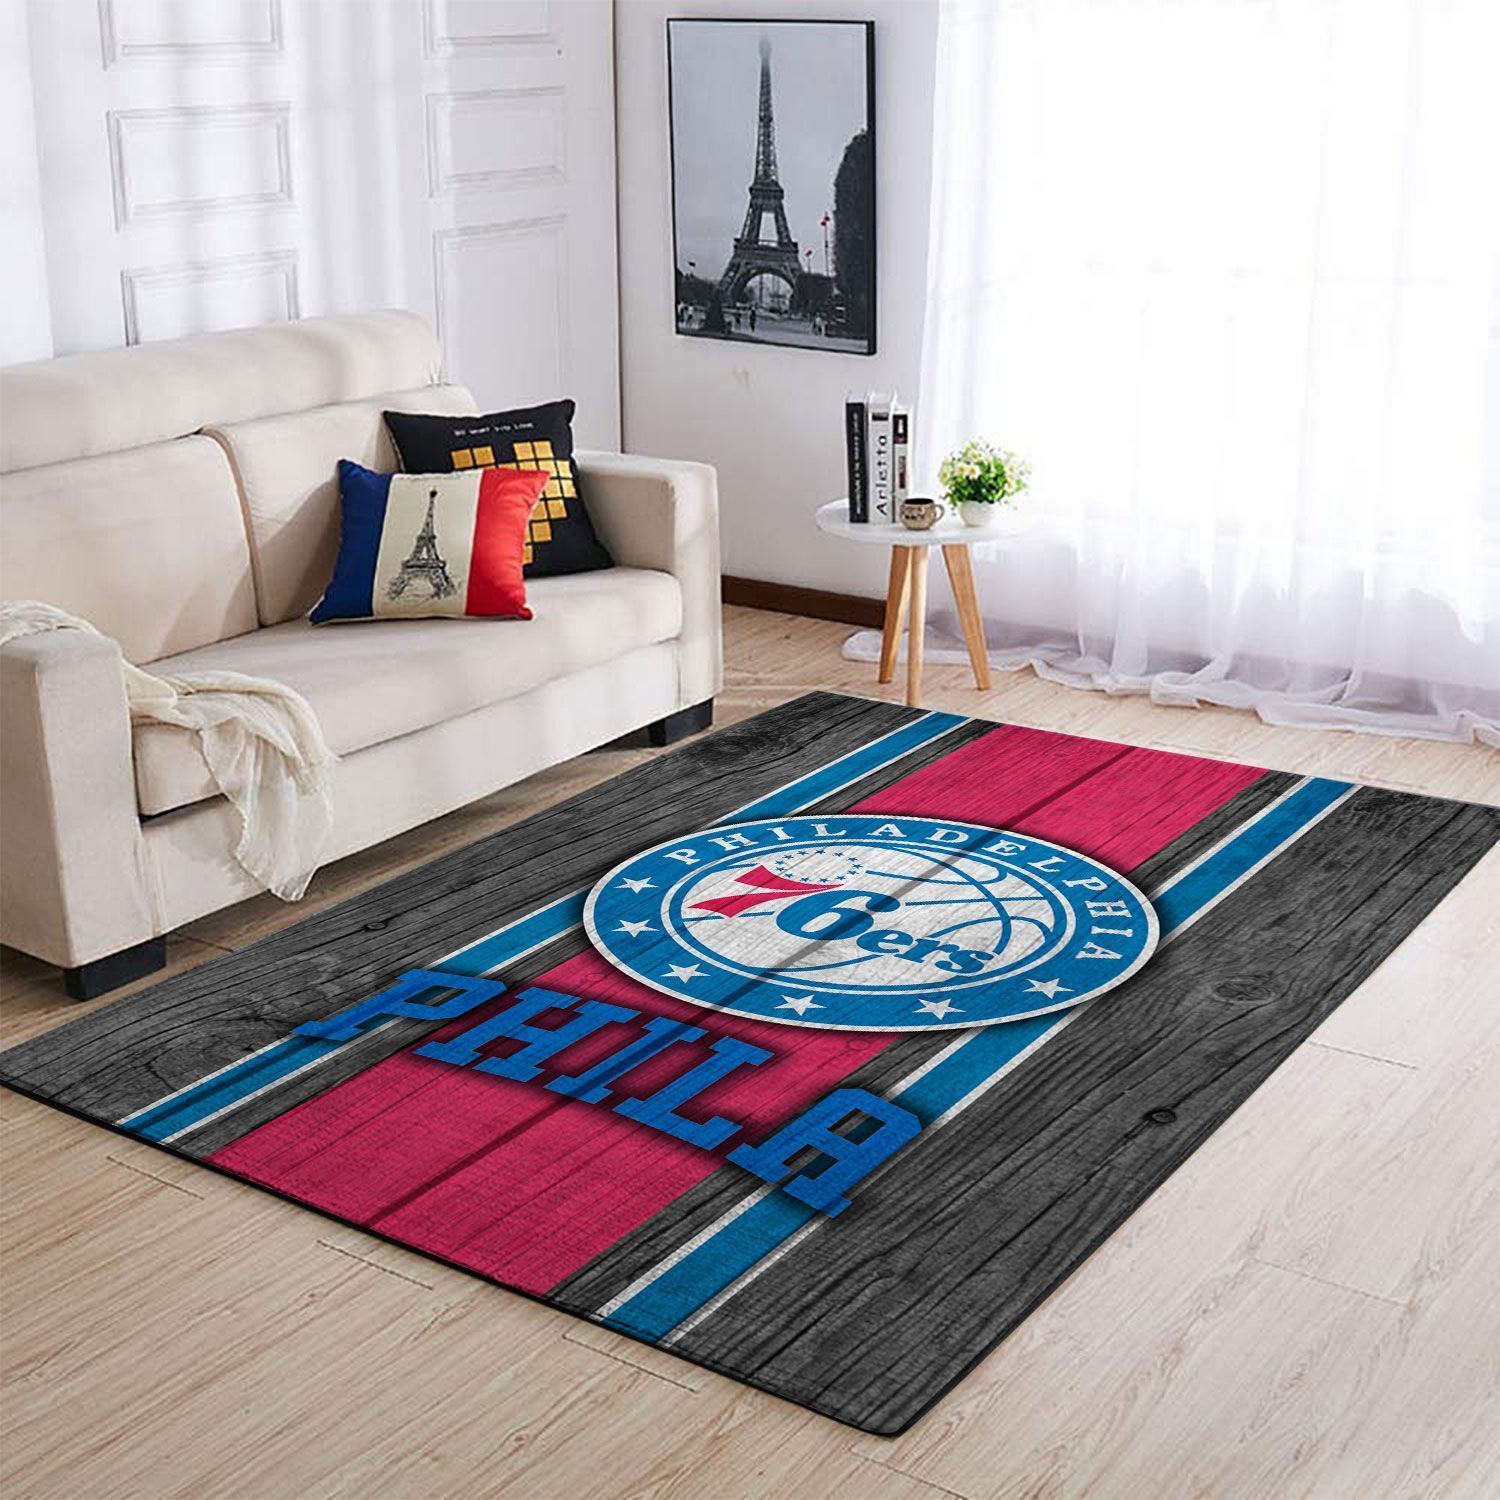 Philadelphia 76ers Living Room Area Rug